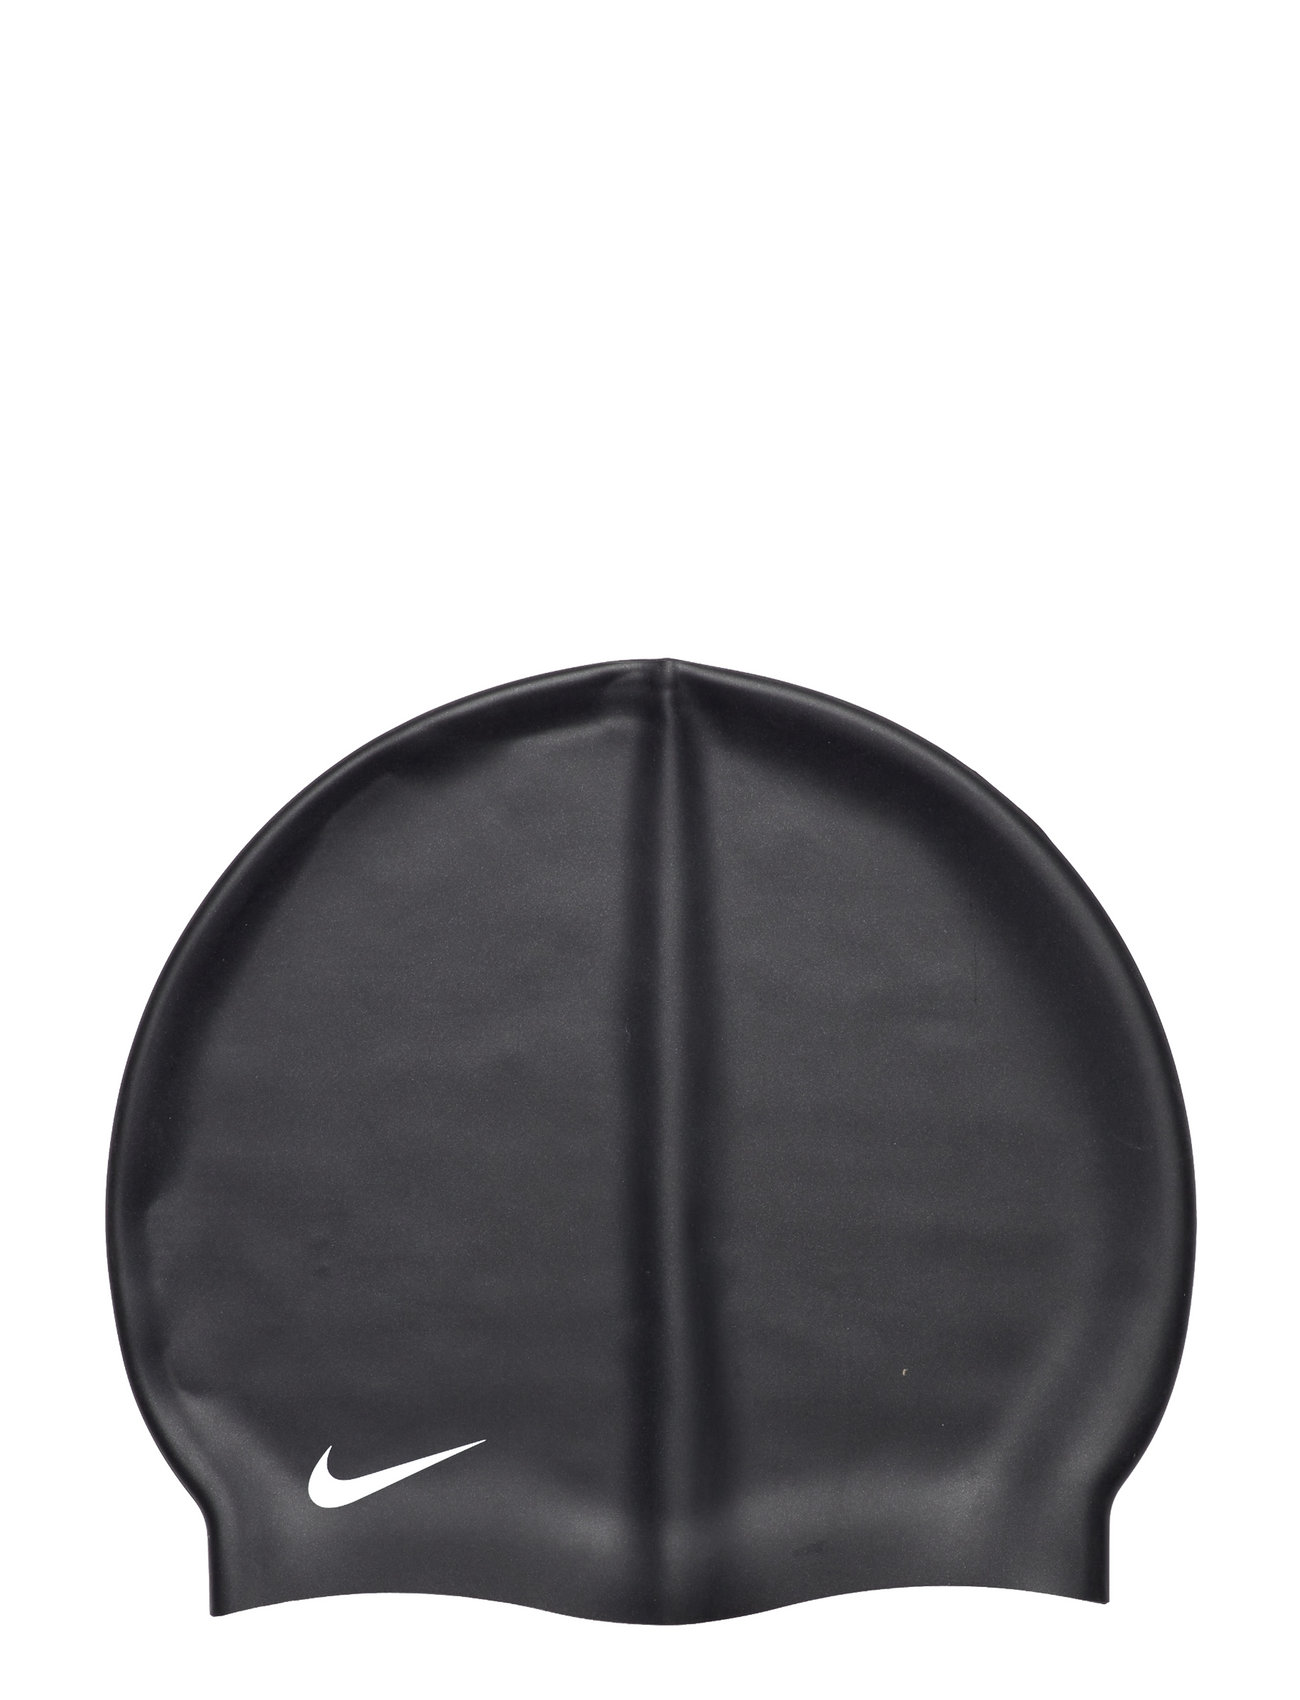 Nike Cap Silikon Sport Sports Equipment Swimming Accessories Black NIKE SWIM